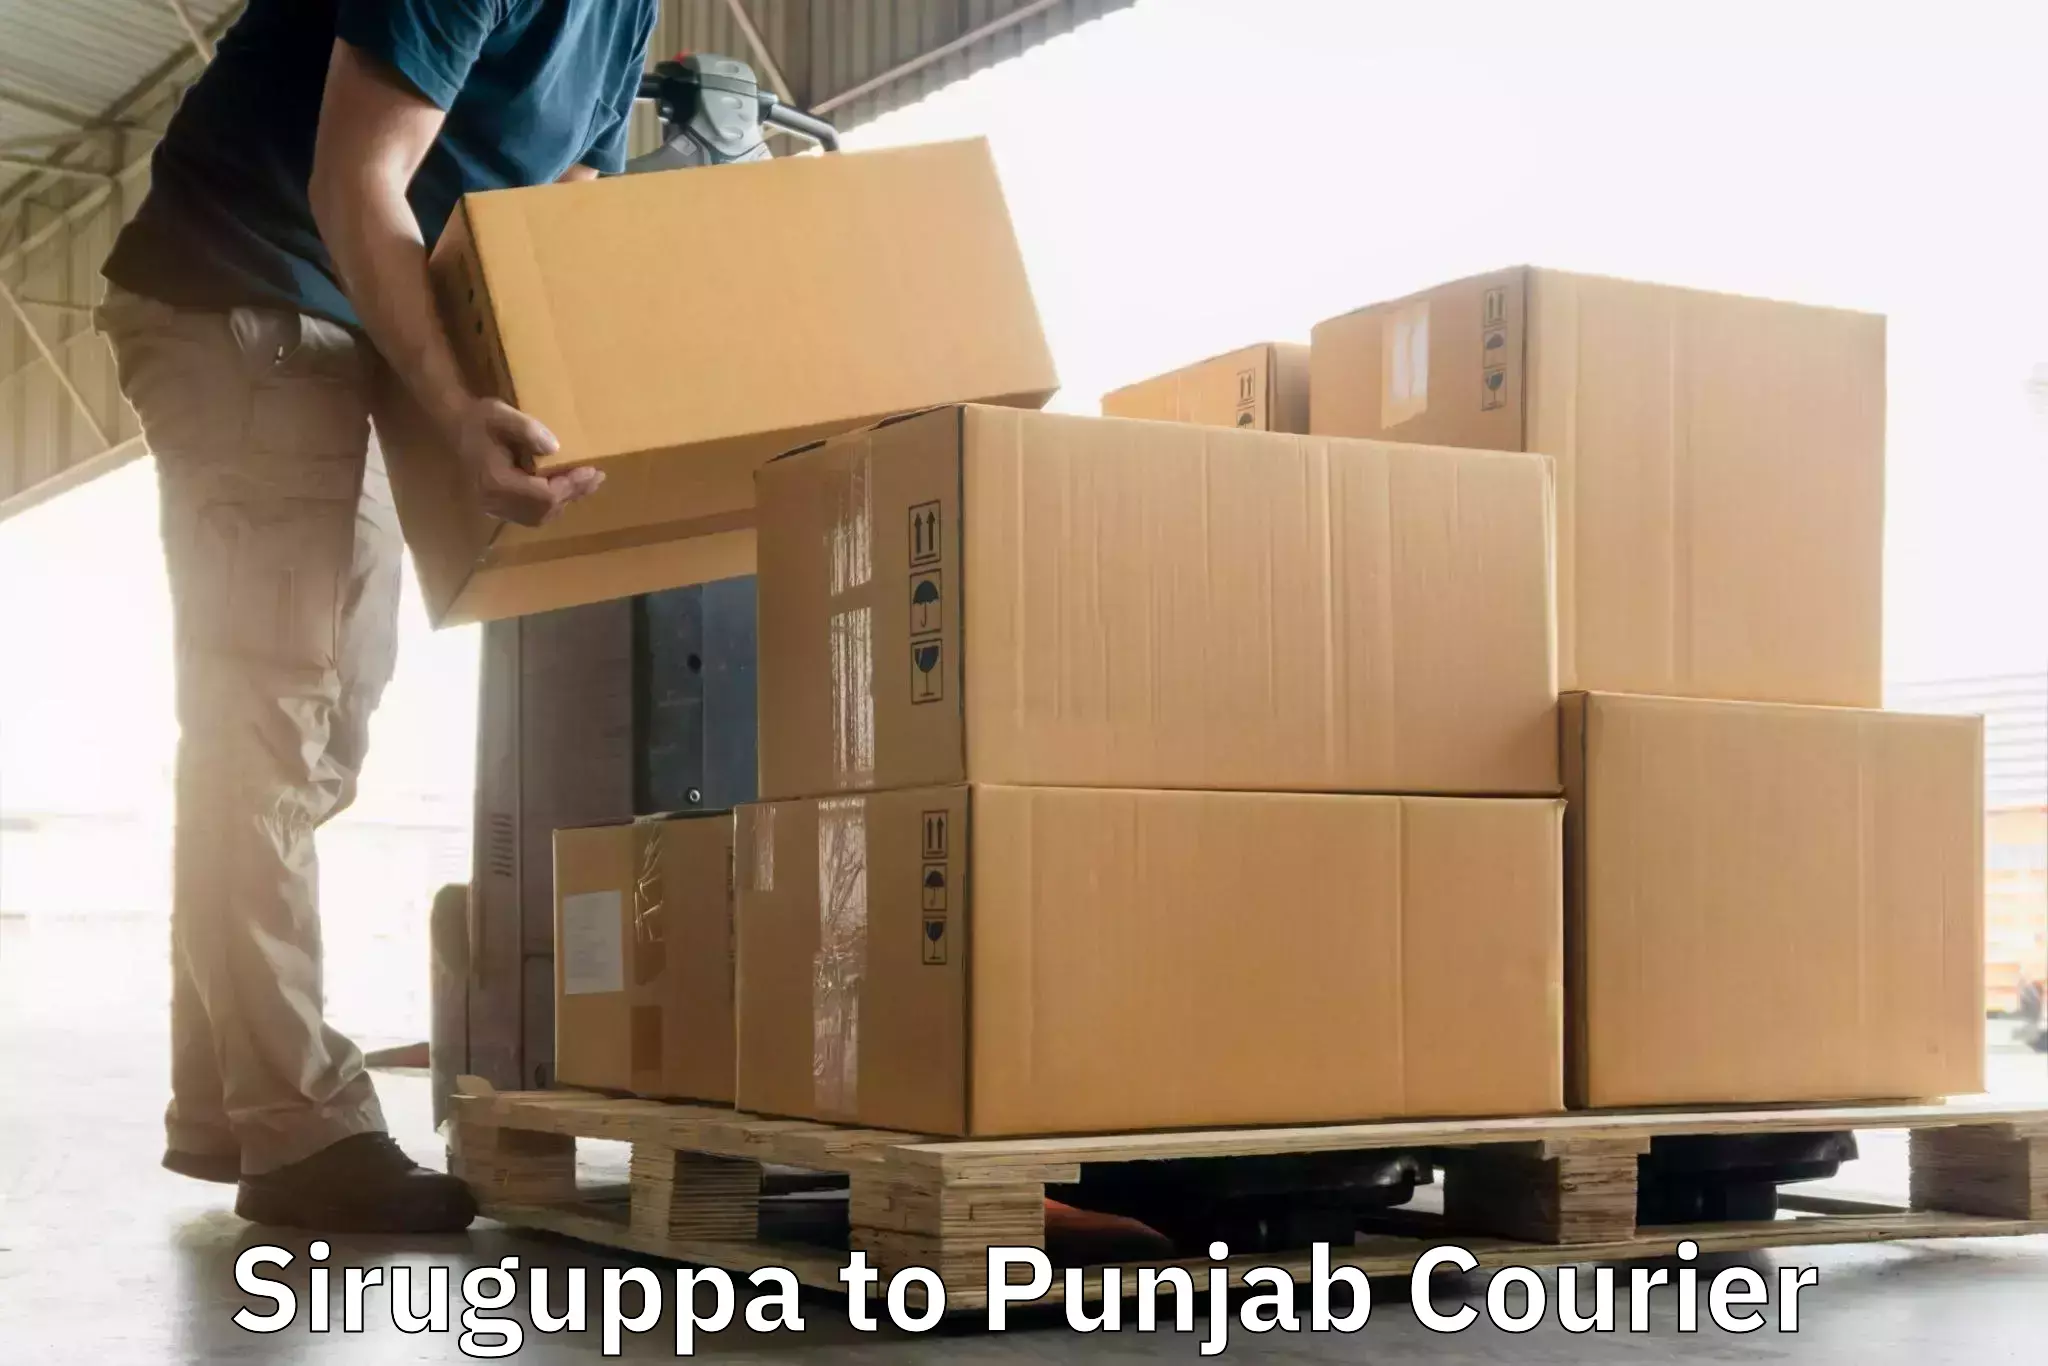 Digital courier platforms Siruguppa to Batala